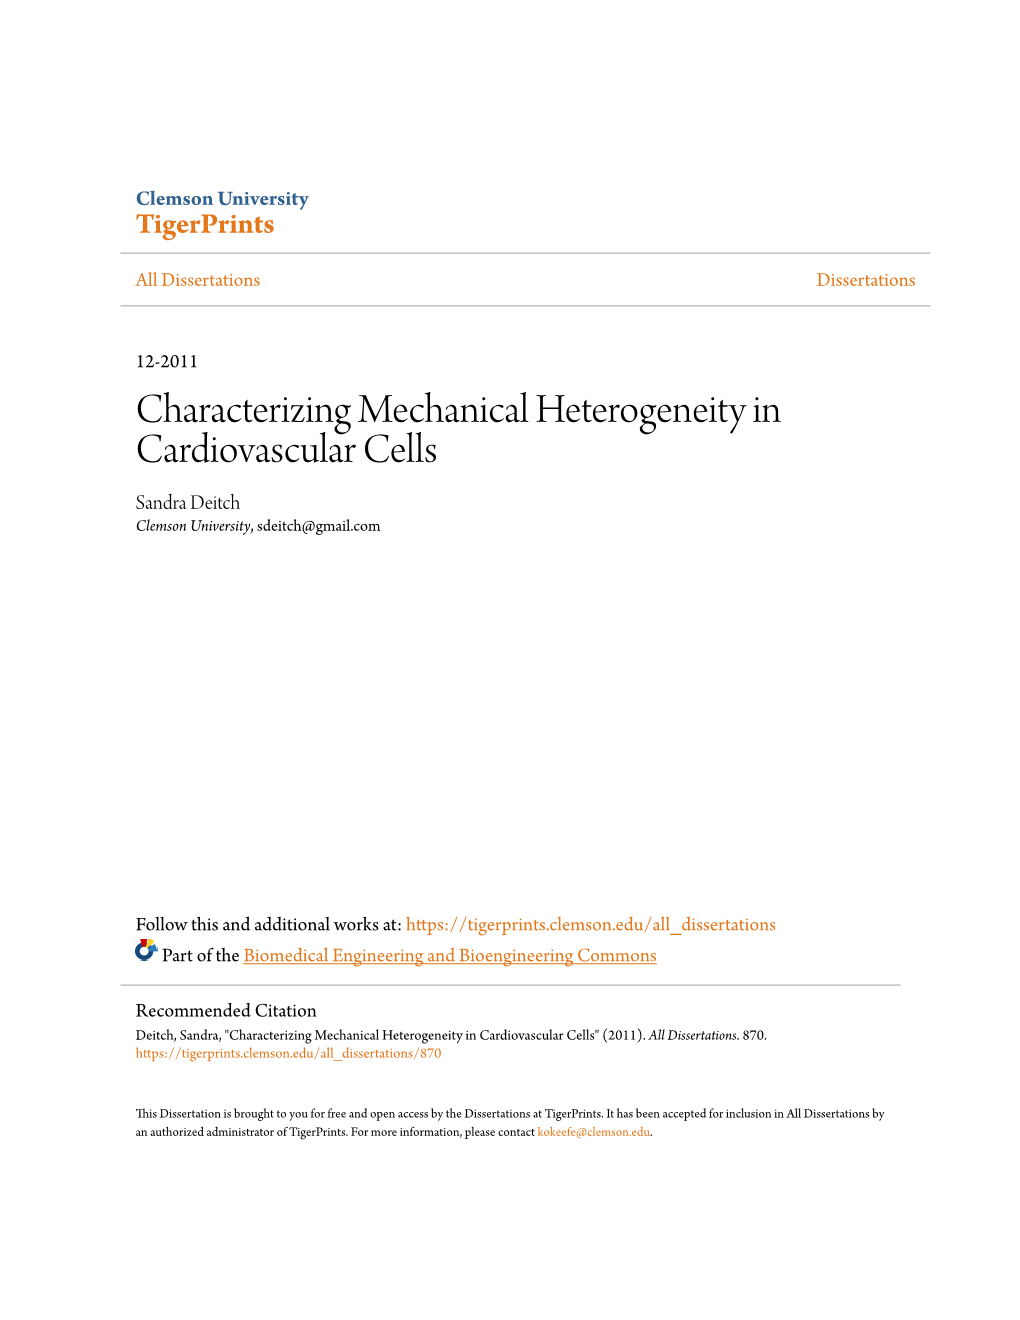 Characterizing Mechanical Heterogeneity in Cardiovascular Cells Sandra Deitch Clemson University, Sdeitch@Gmail.Com